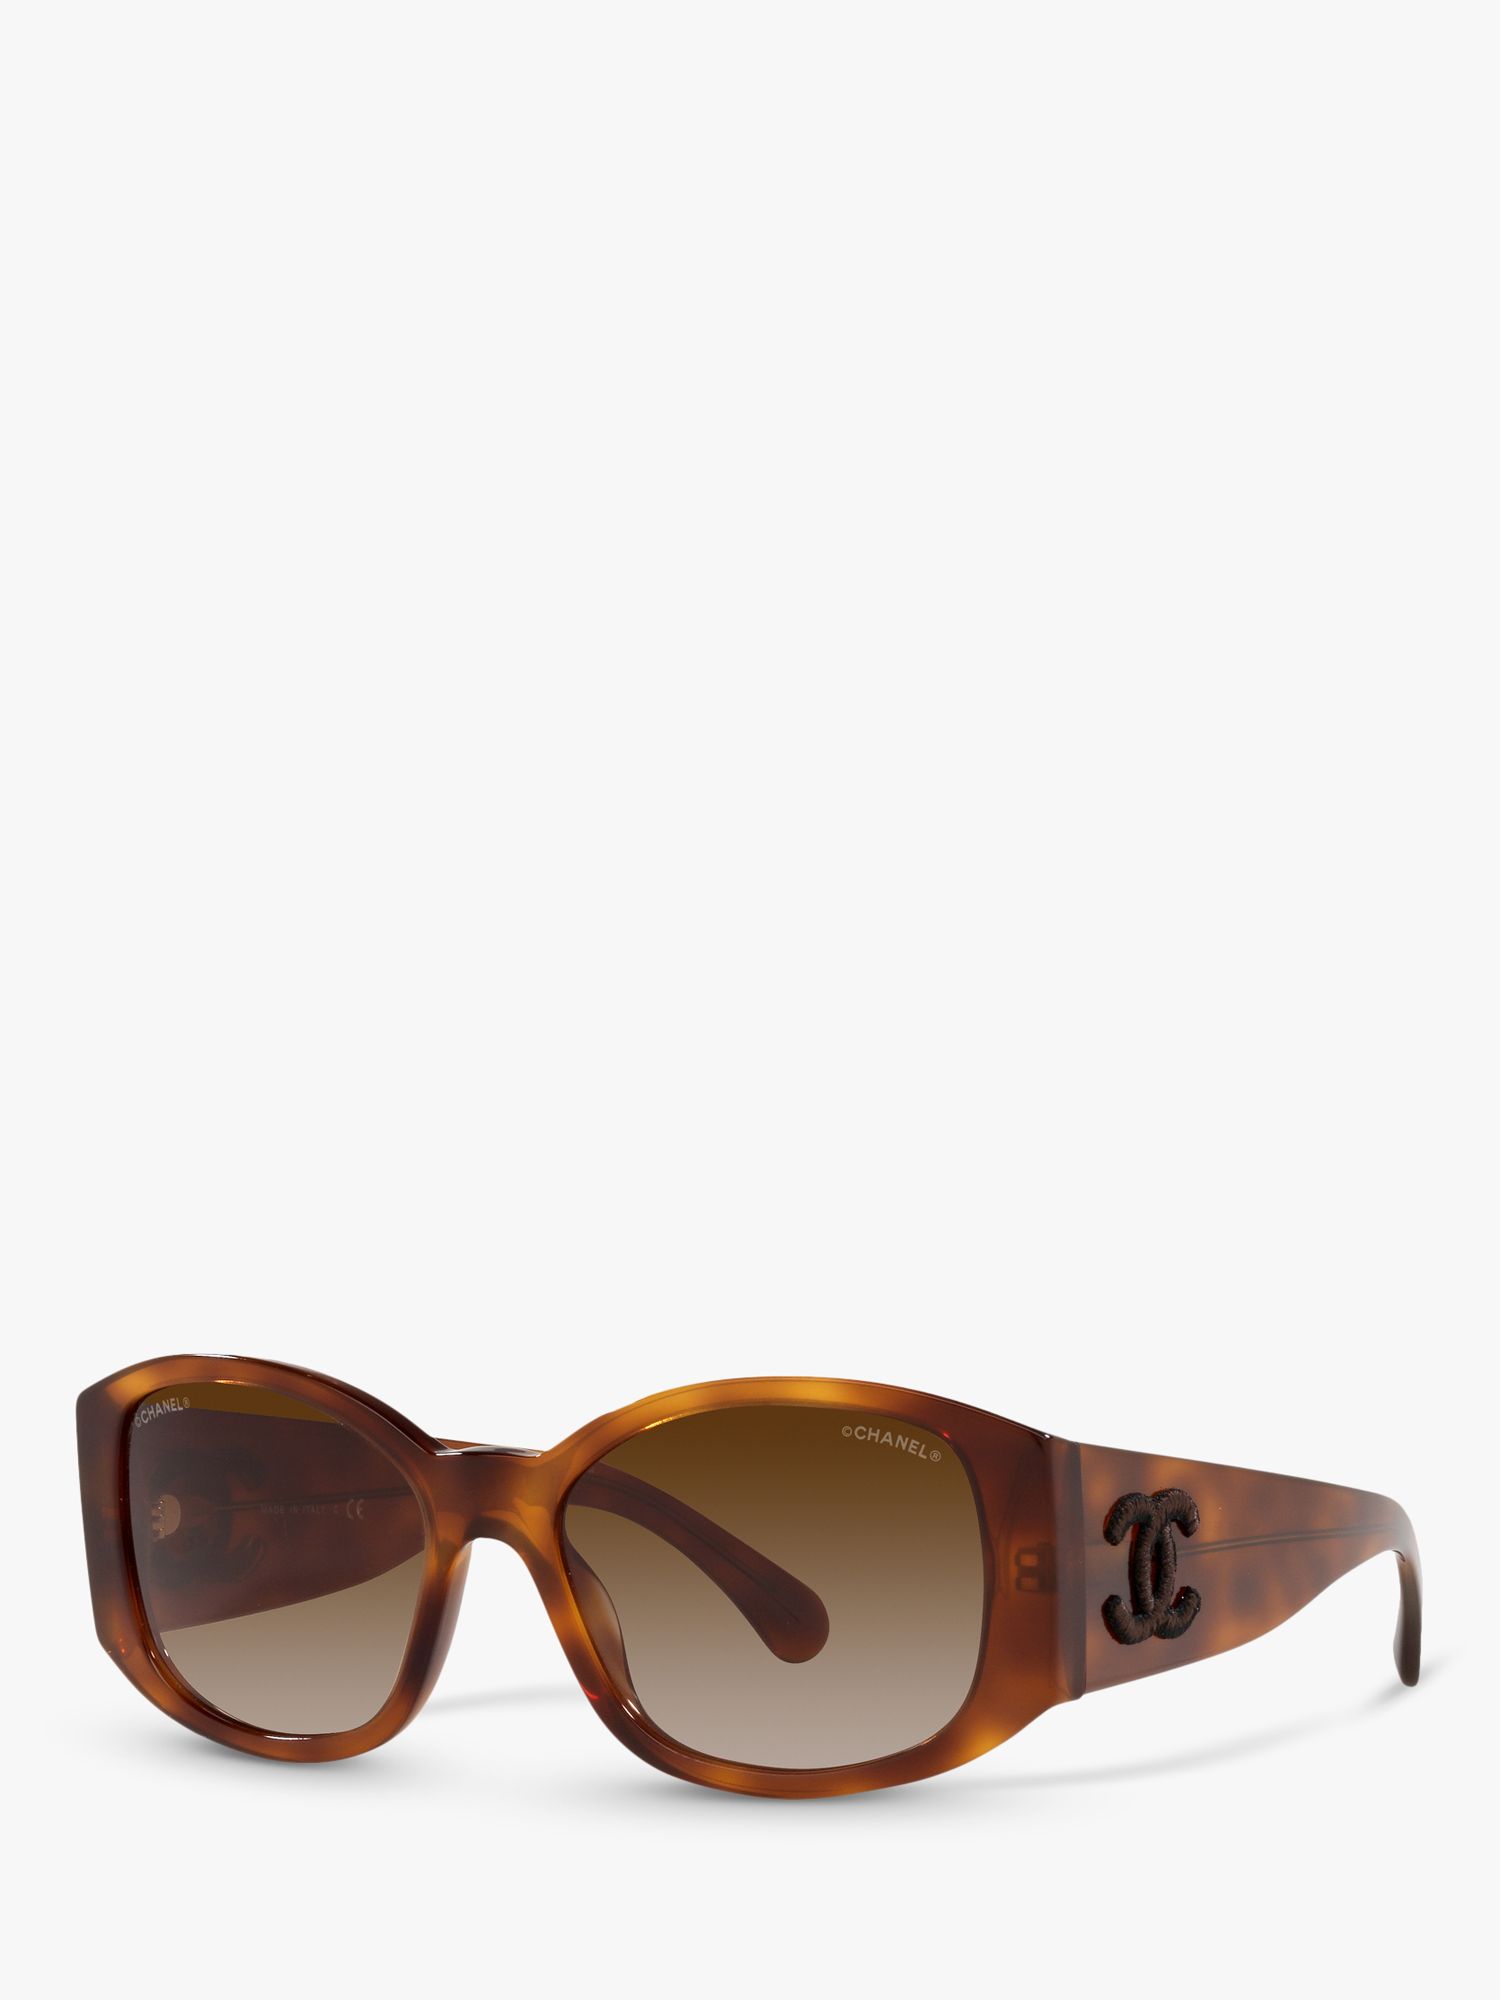 CHANEL Irregular Sunglasses CH5450 Havana/Brown Gradient at John